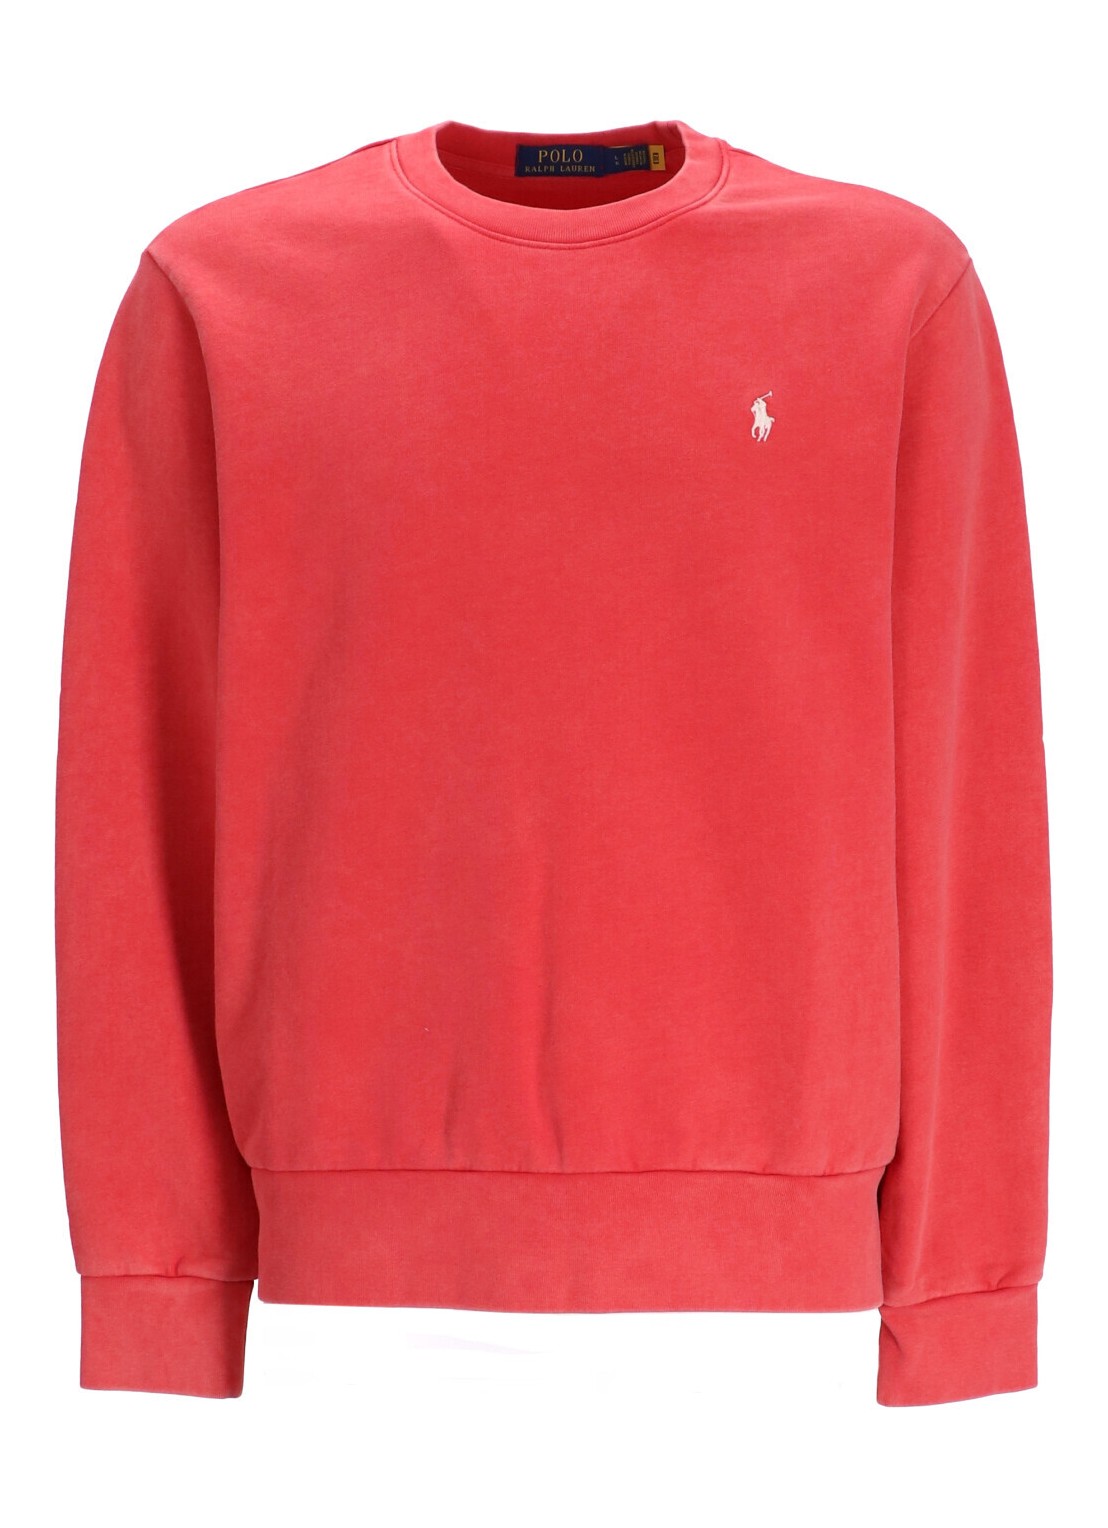 Sudadera polo ralph lauren sweater man lscnm1-long sleeve-sweatshirt 710916689008 post red talla L
 